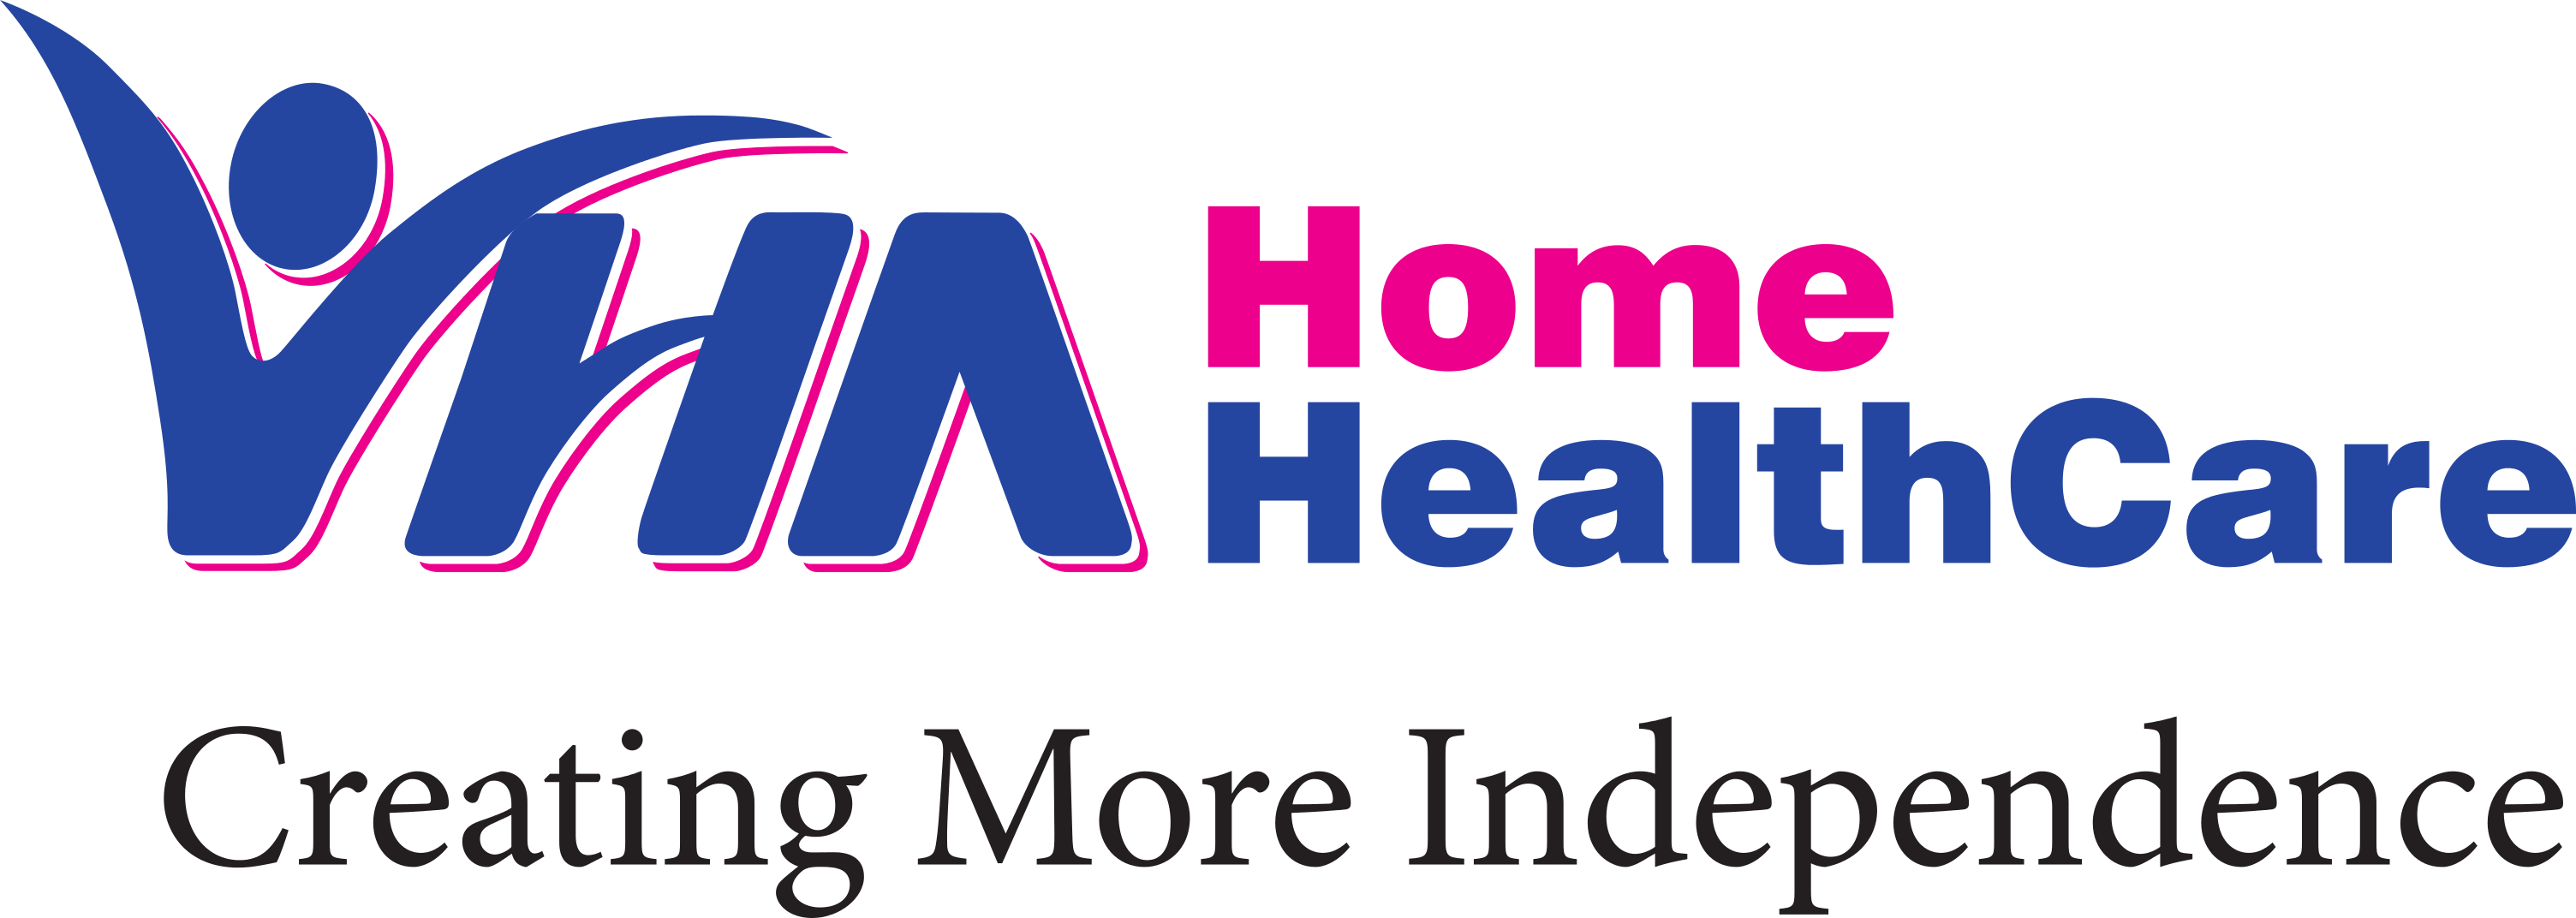 VHA Home HealthCare Logo